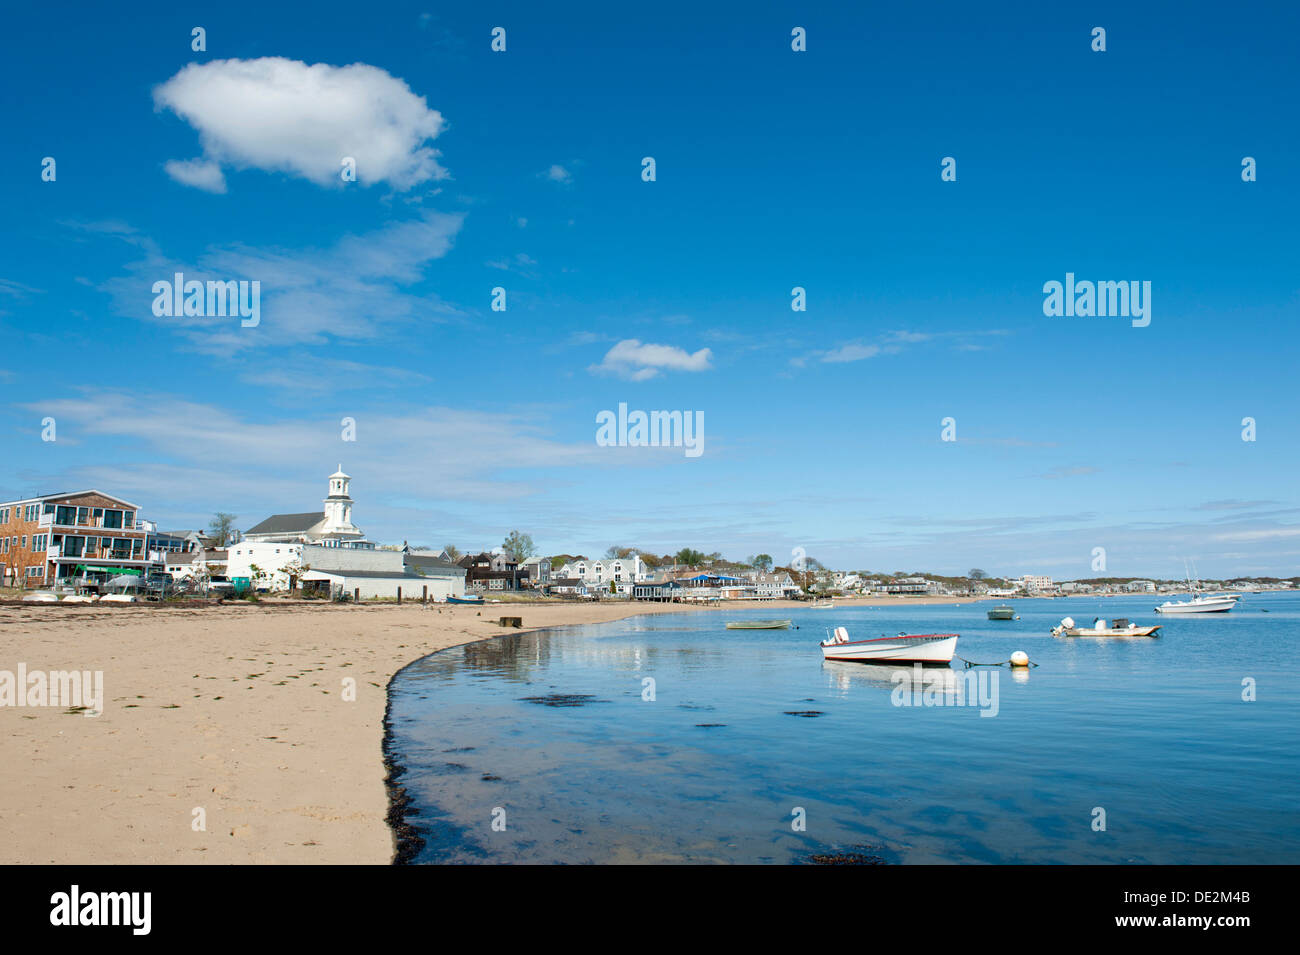 Sandy beach with boats in the sea, Provincetown, Cape Cod, Atlantic, Massachusetts, USA, North America Stock Photo